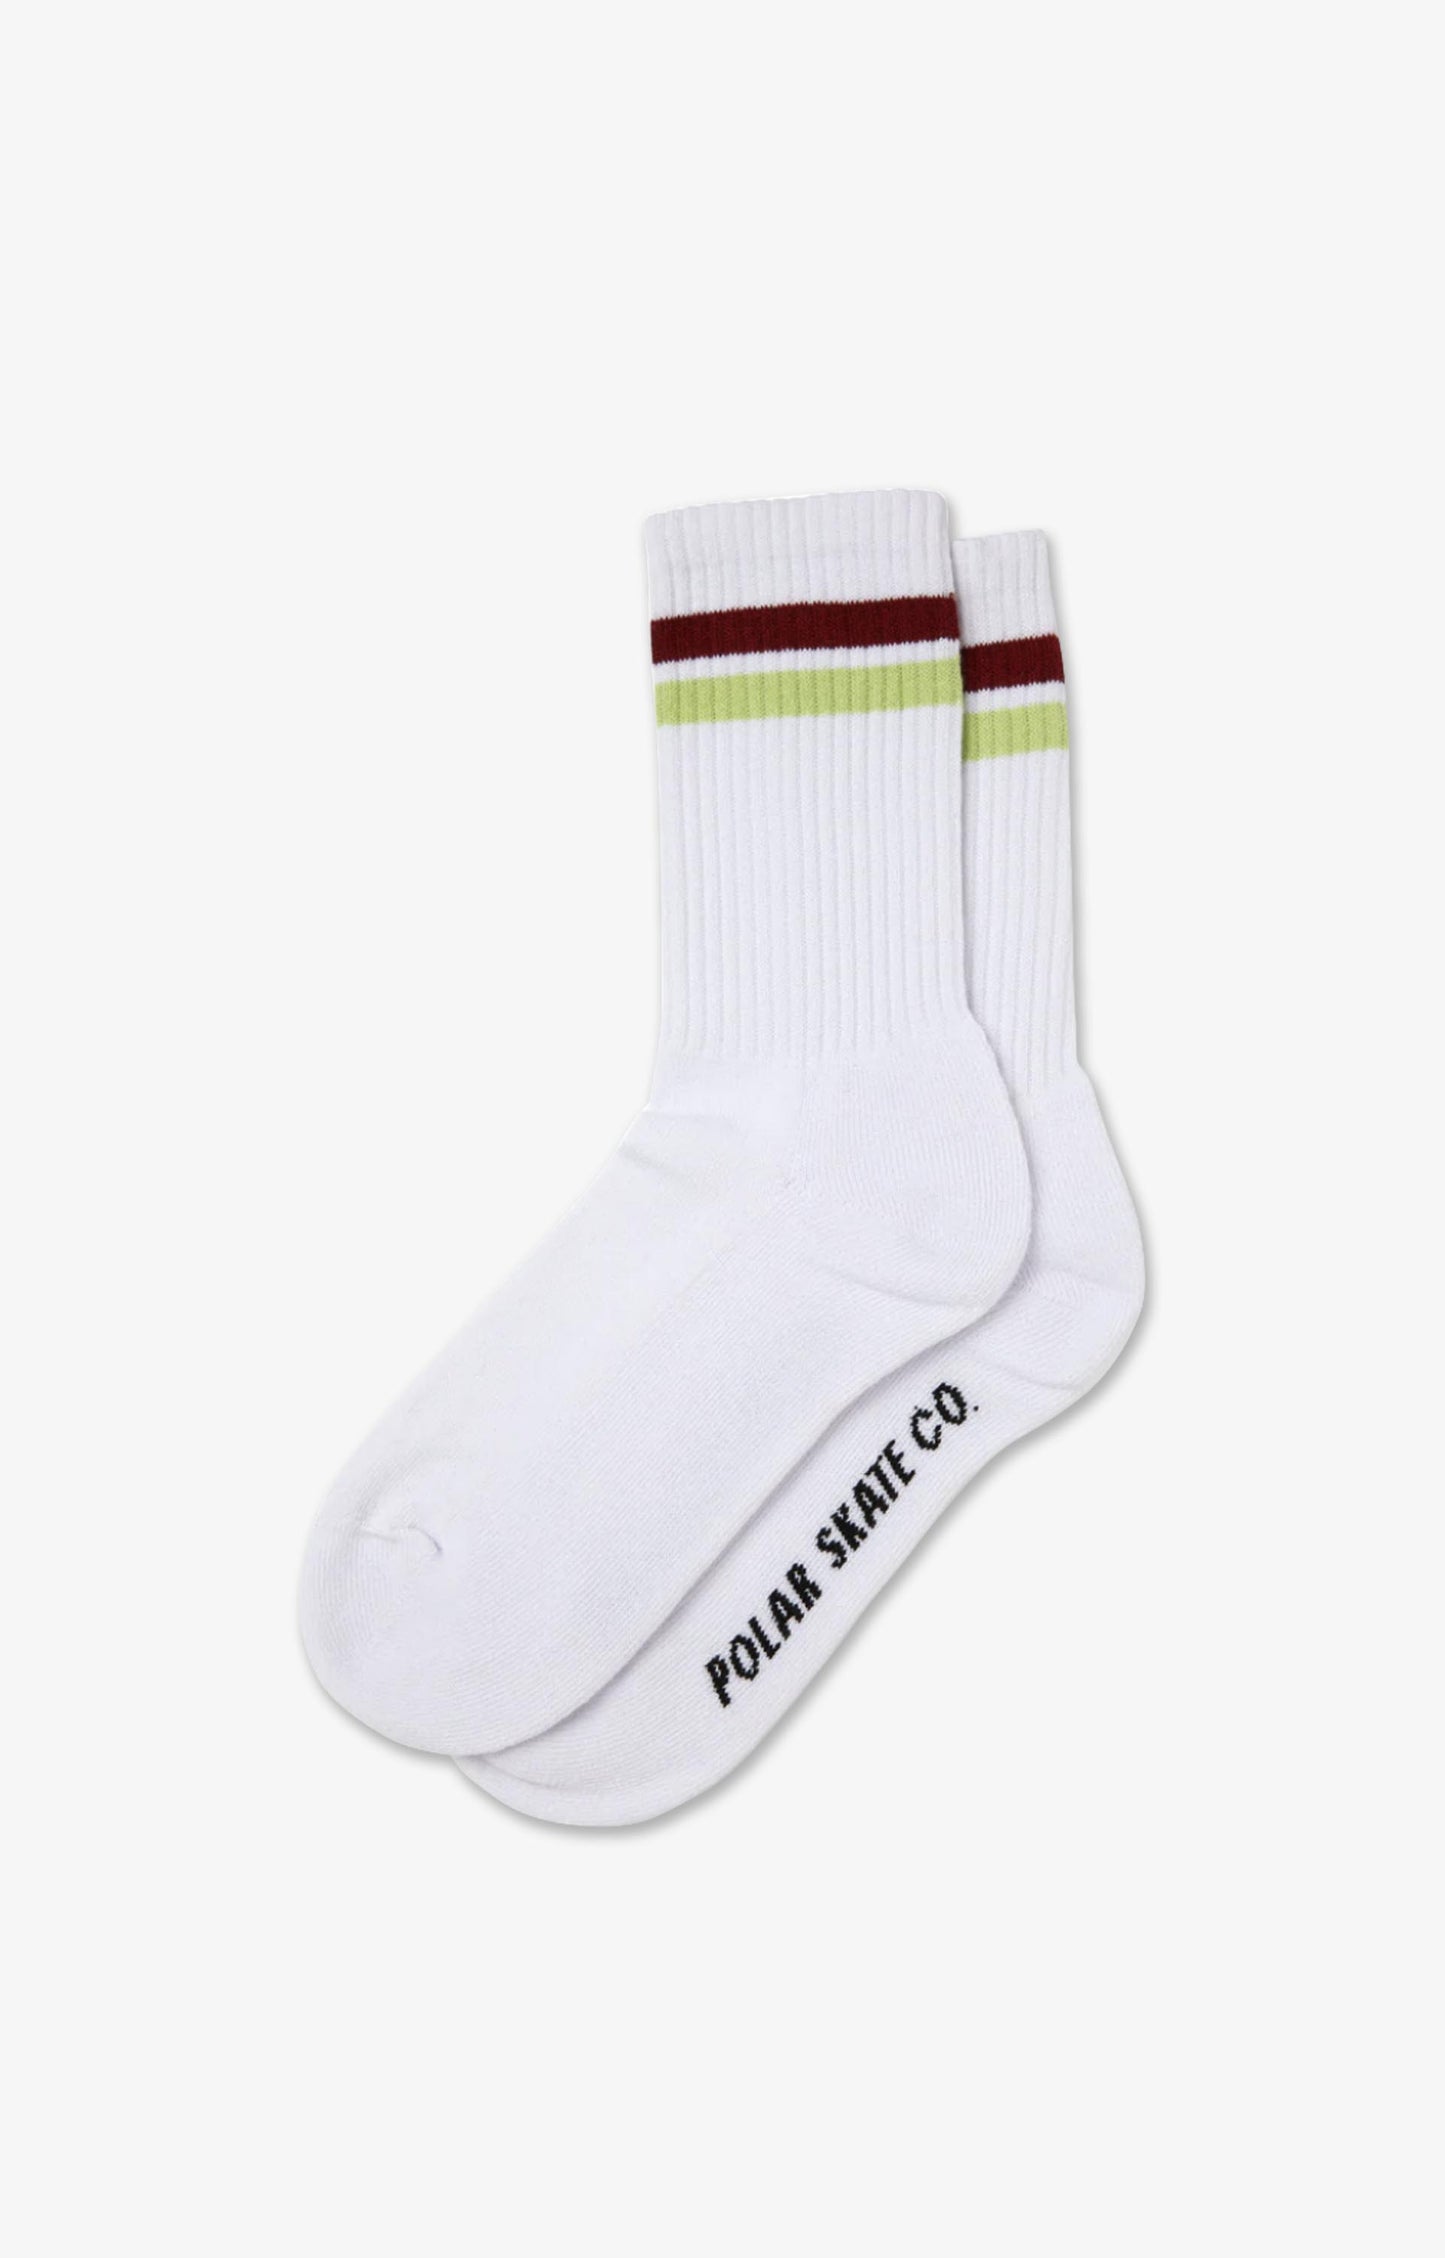 Polar Skate Co Stripe Socks, White/Rich Red/Chartreuse